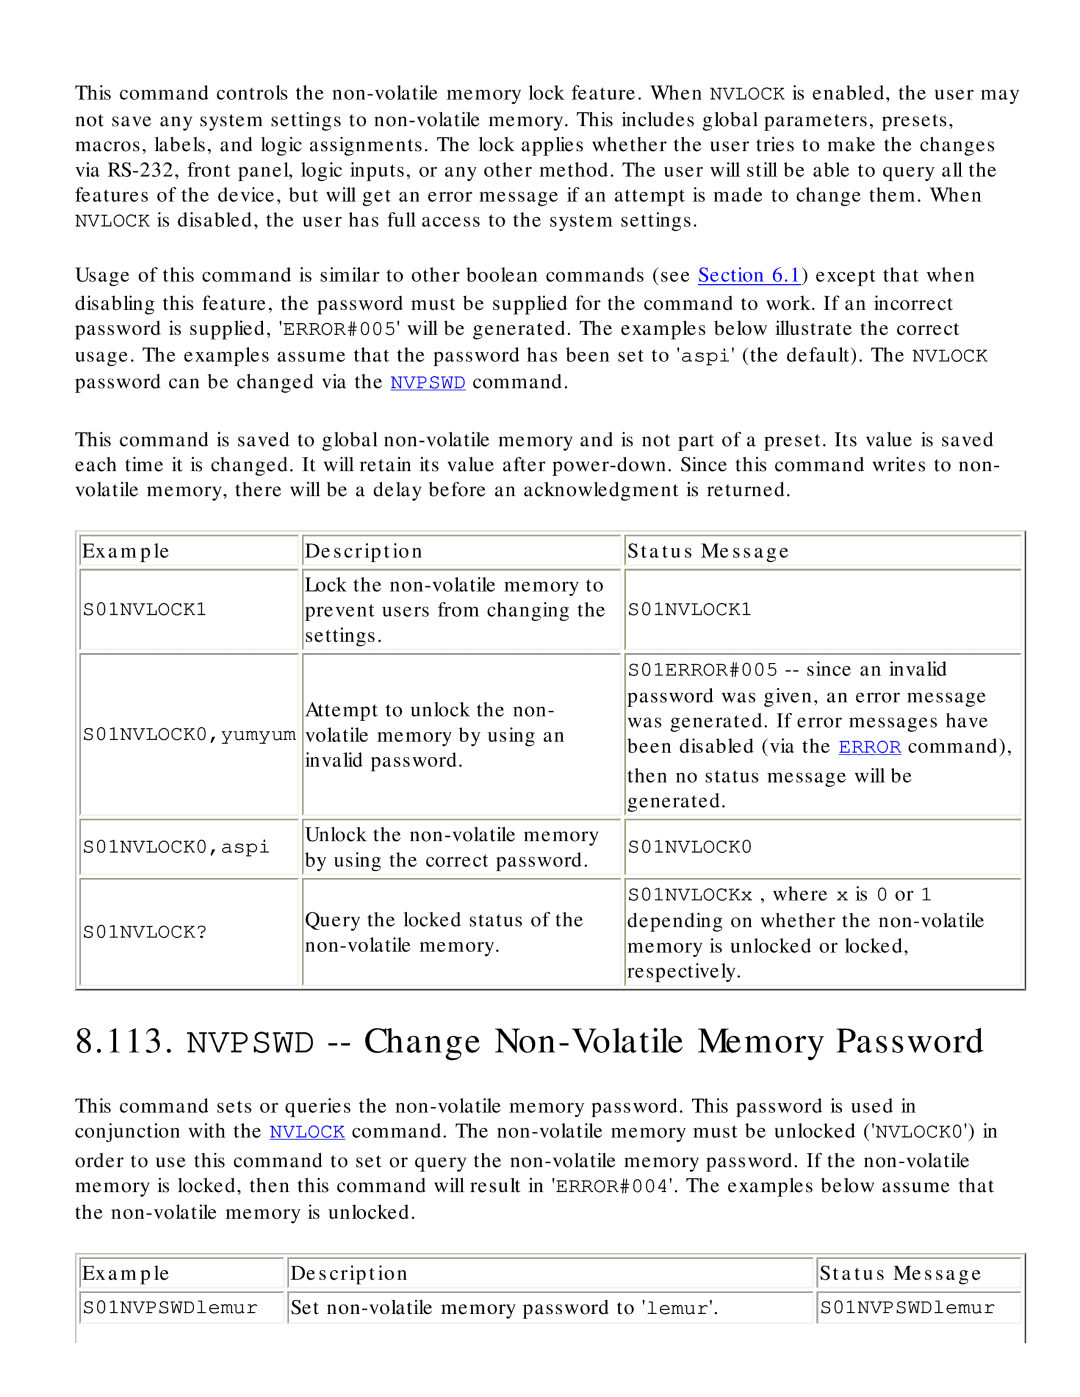 Polycom RS-232 manual Nvpswd -- Change Non-Volatile Memory Password, Query the locked status of the non-volatile memory 